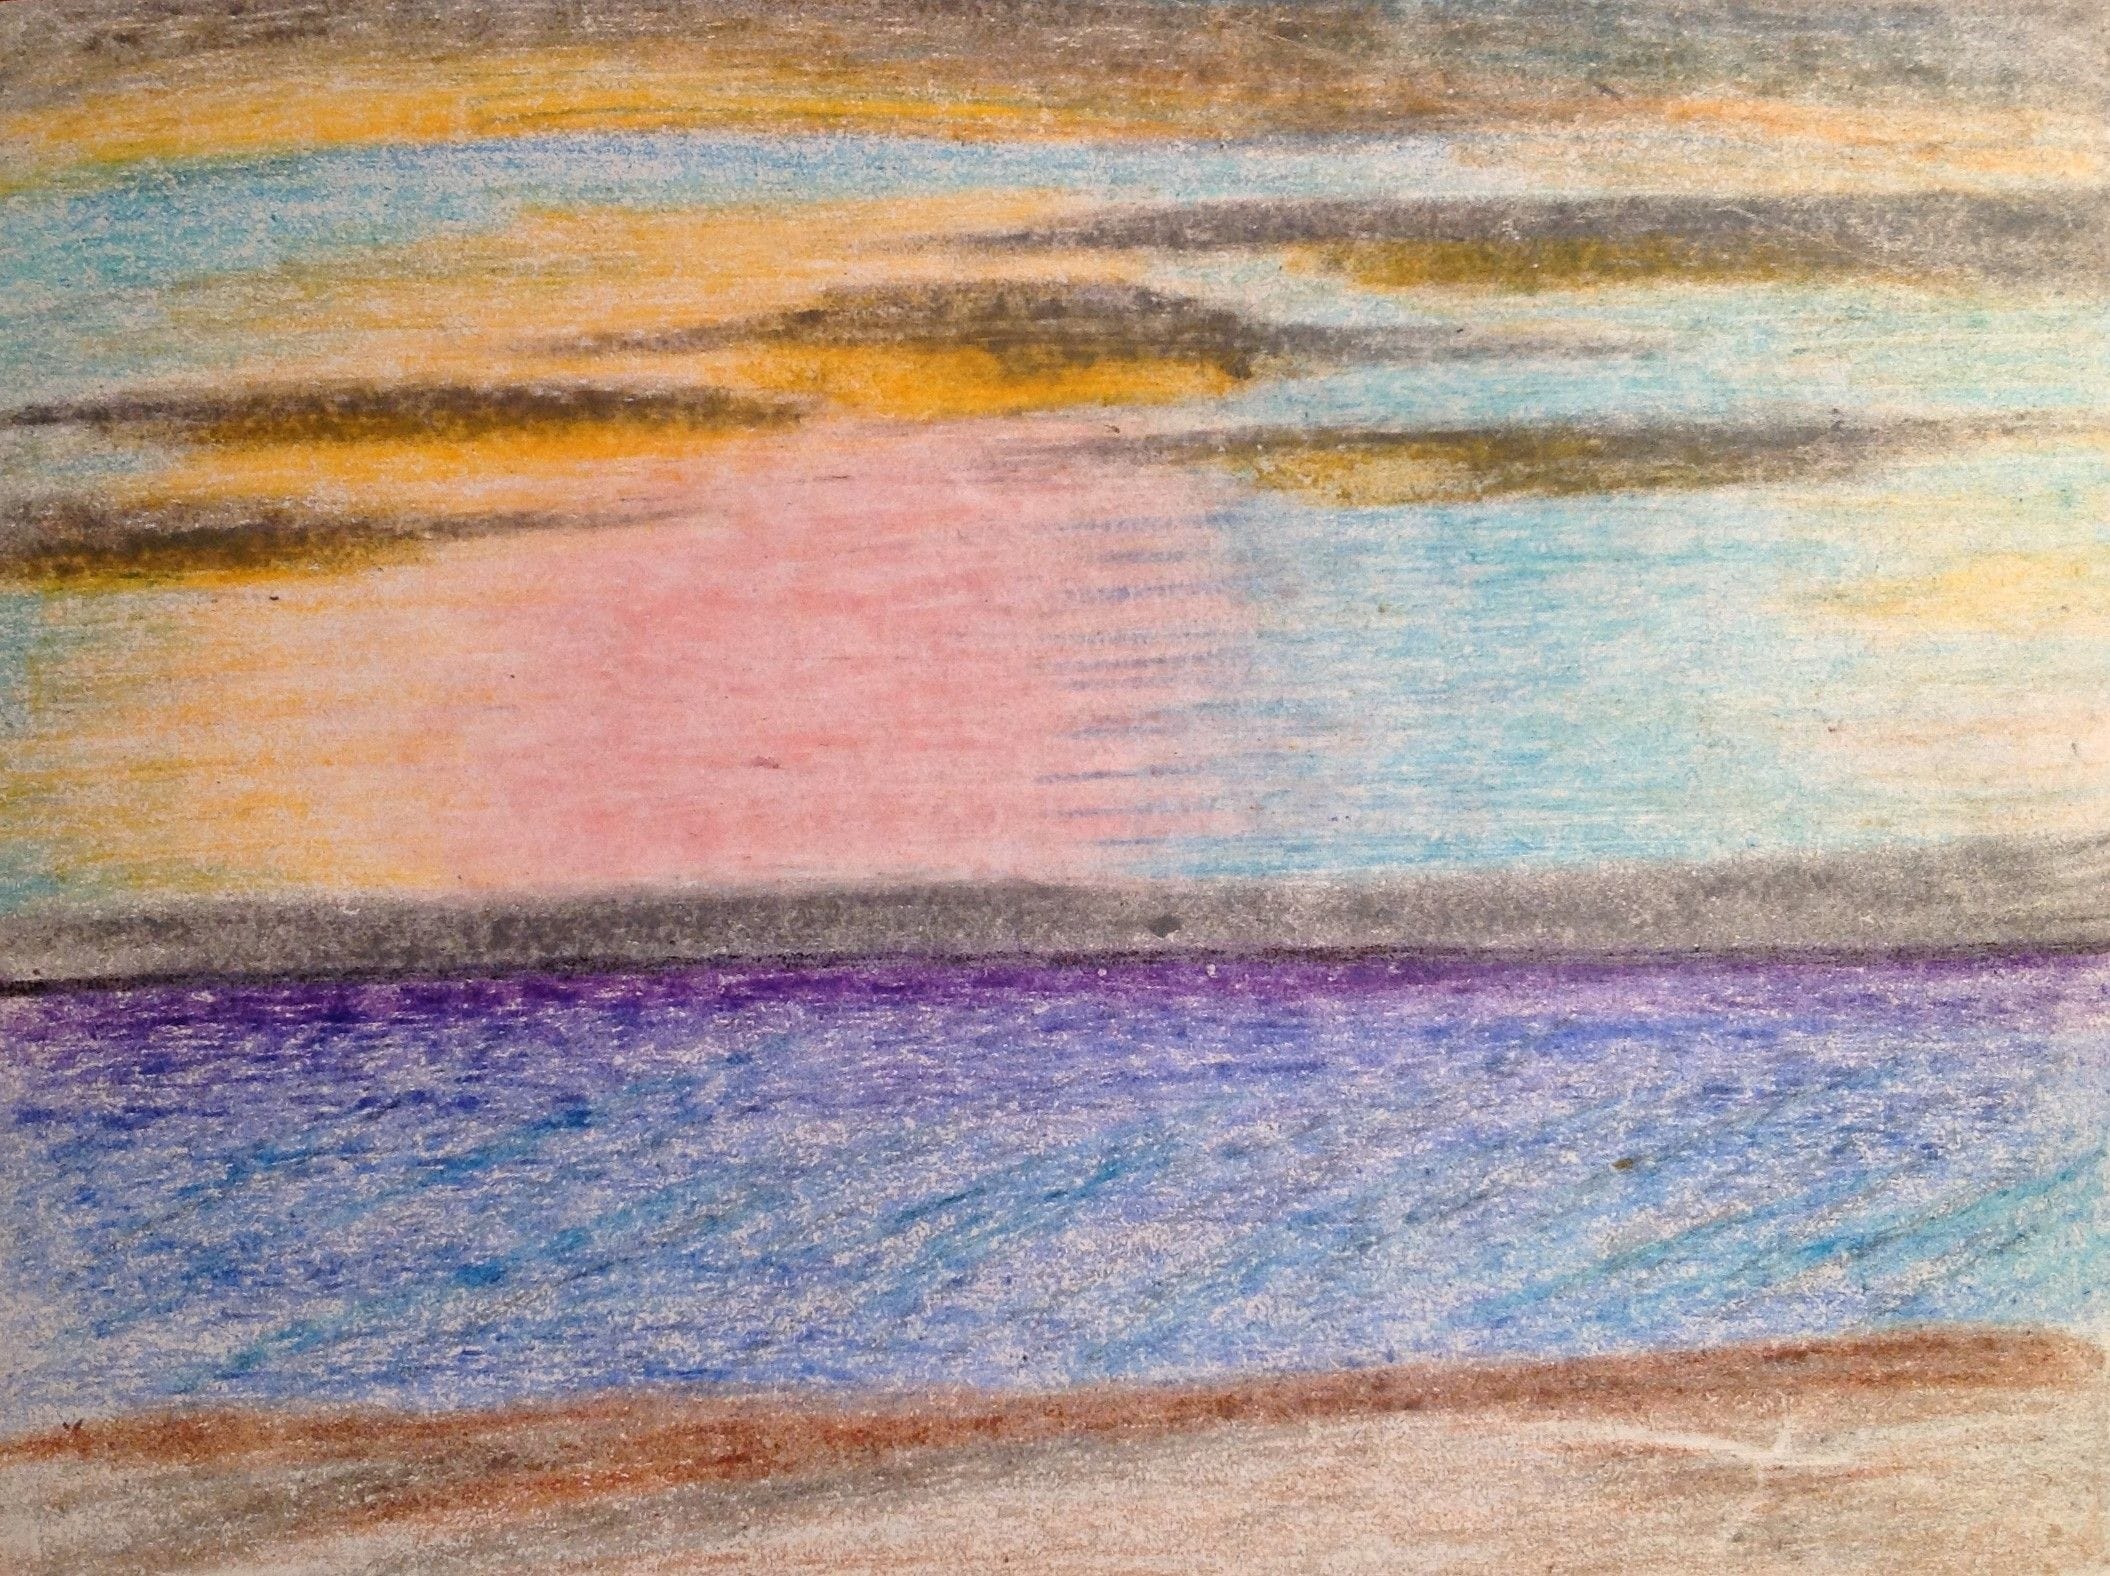 Sunset Bonita Beach, 1983
Crayon on Paper
11"W x 8.5"H, Walli White, artist